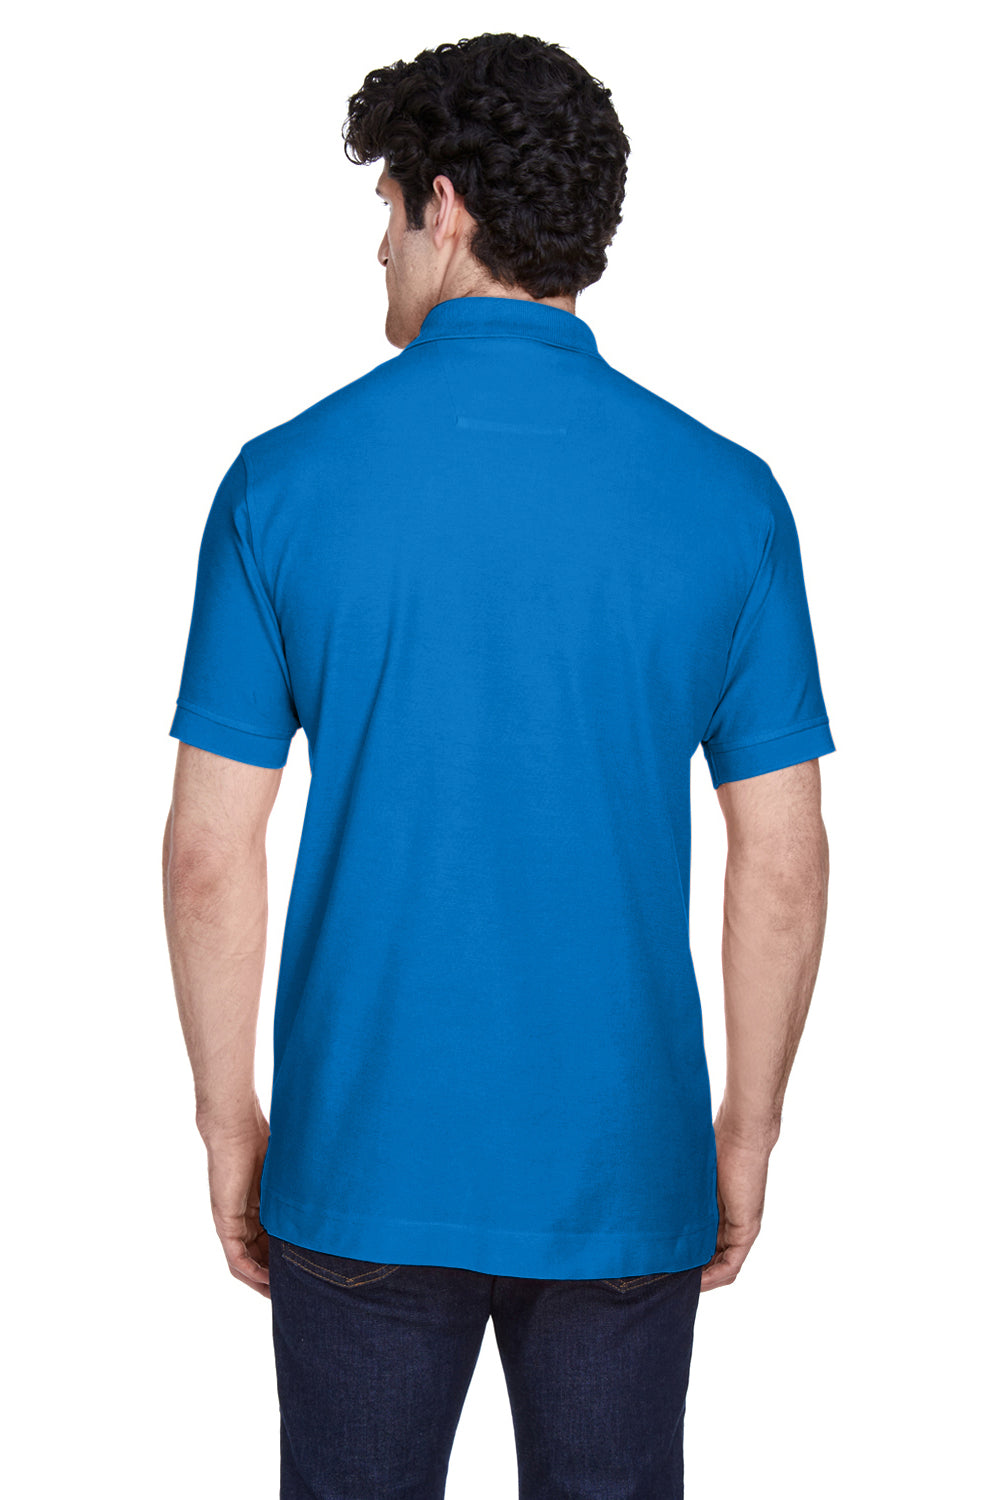 Devon & Jones D100 Mens Short Sleeve Polo Shirt Royal Blue Back